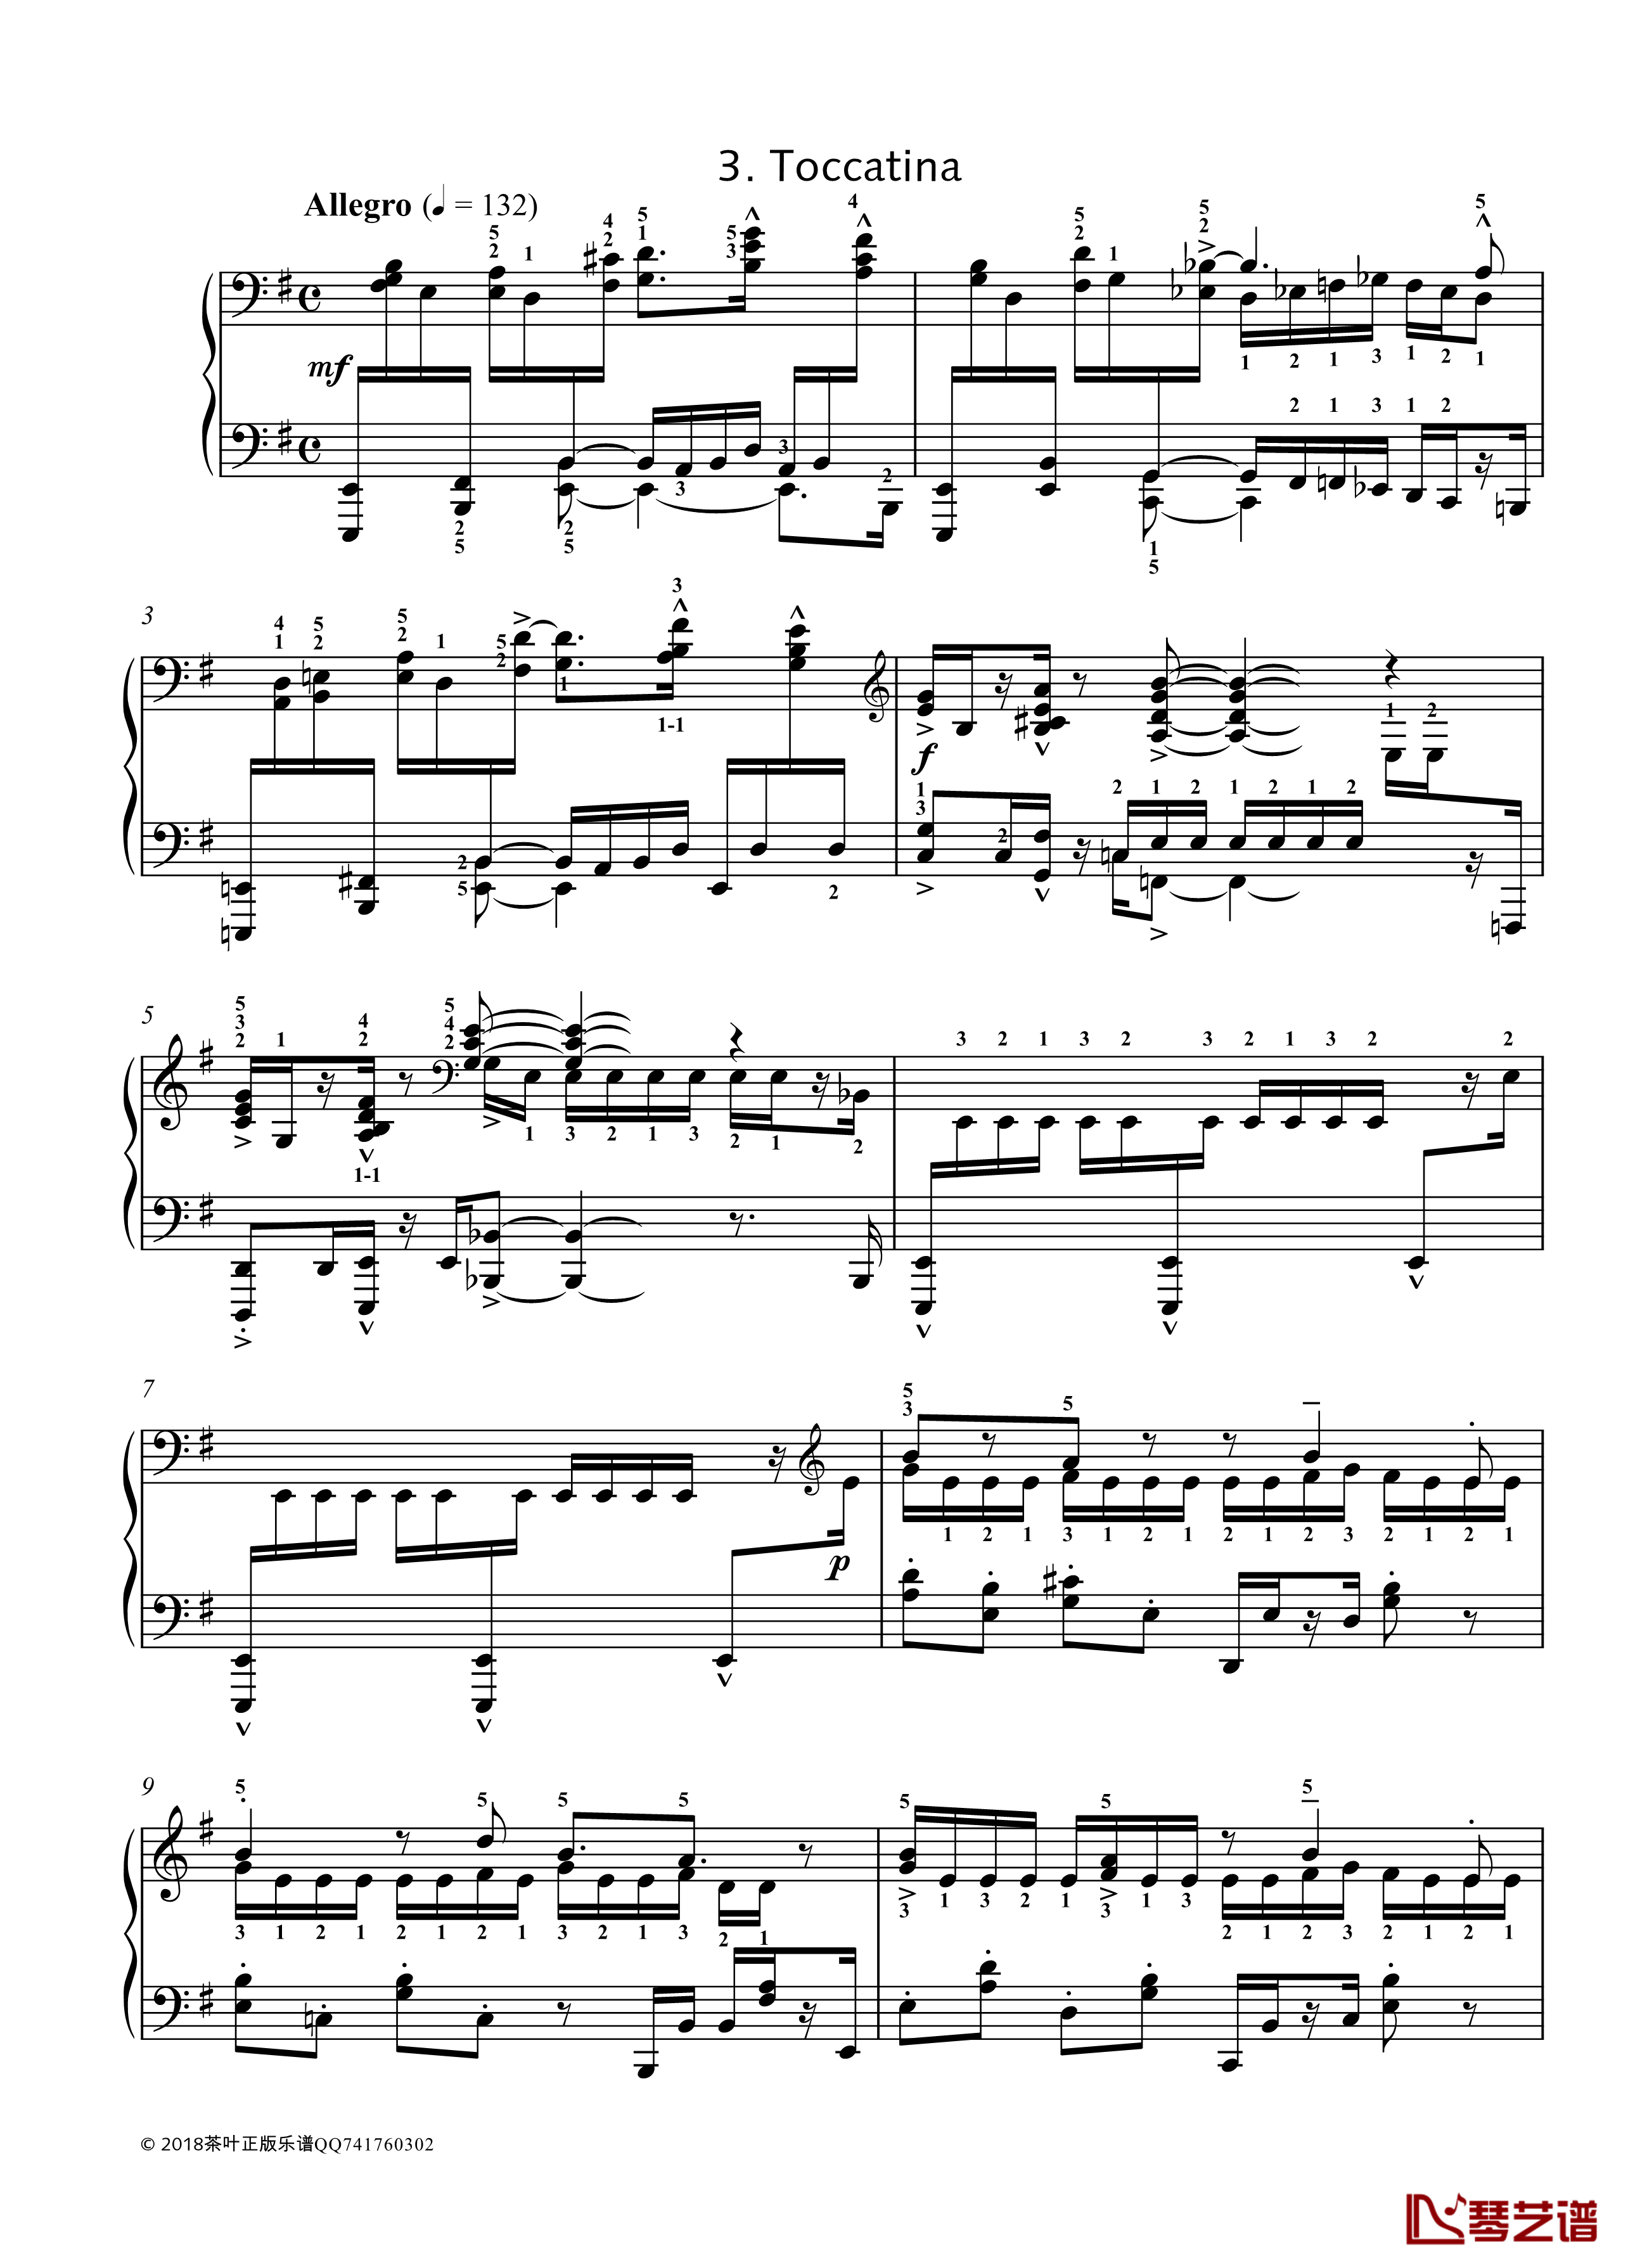 No. 3. Toccatina钢琴谱-带指法-八首音乐会练习曲 Eight Concert ?tudes Op 40-爵士-尼古拉·凯帕斯汀1